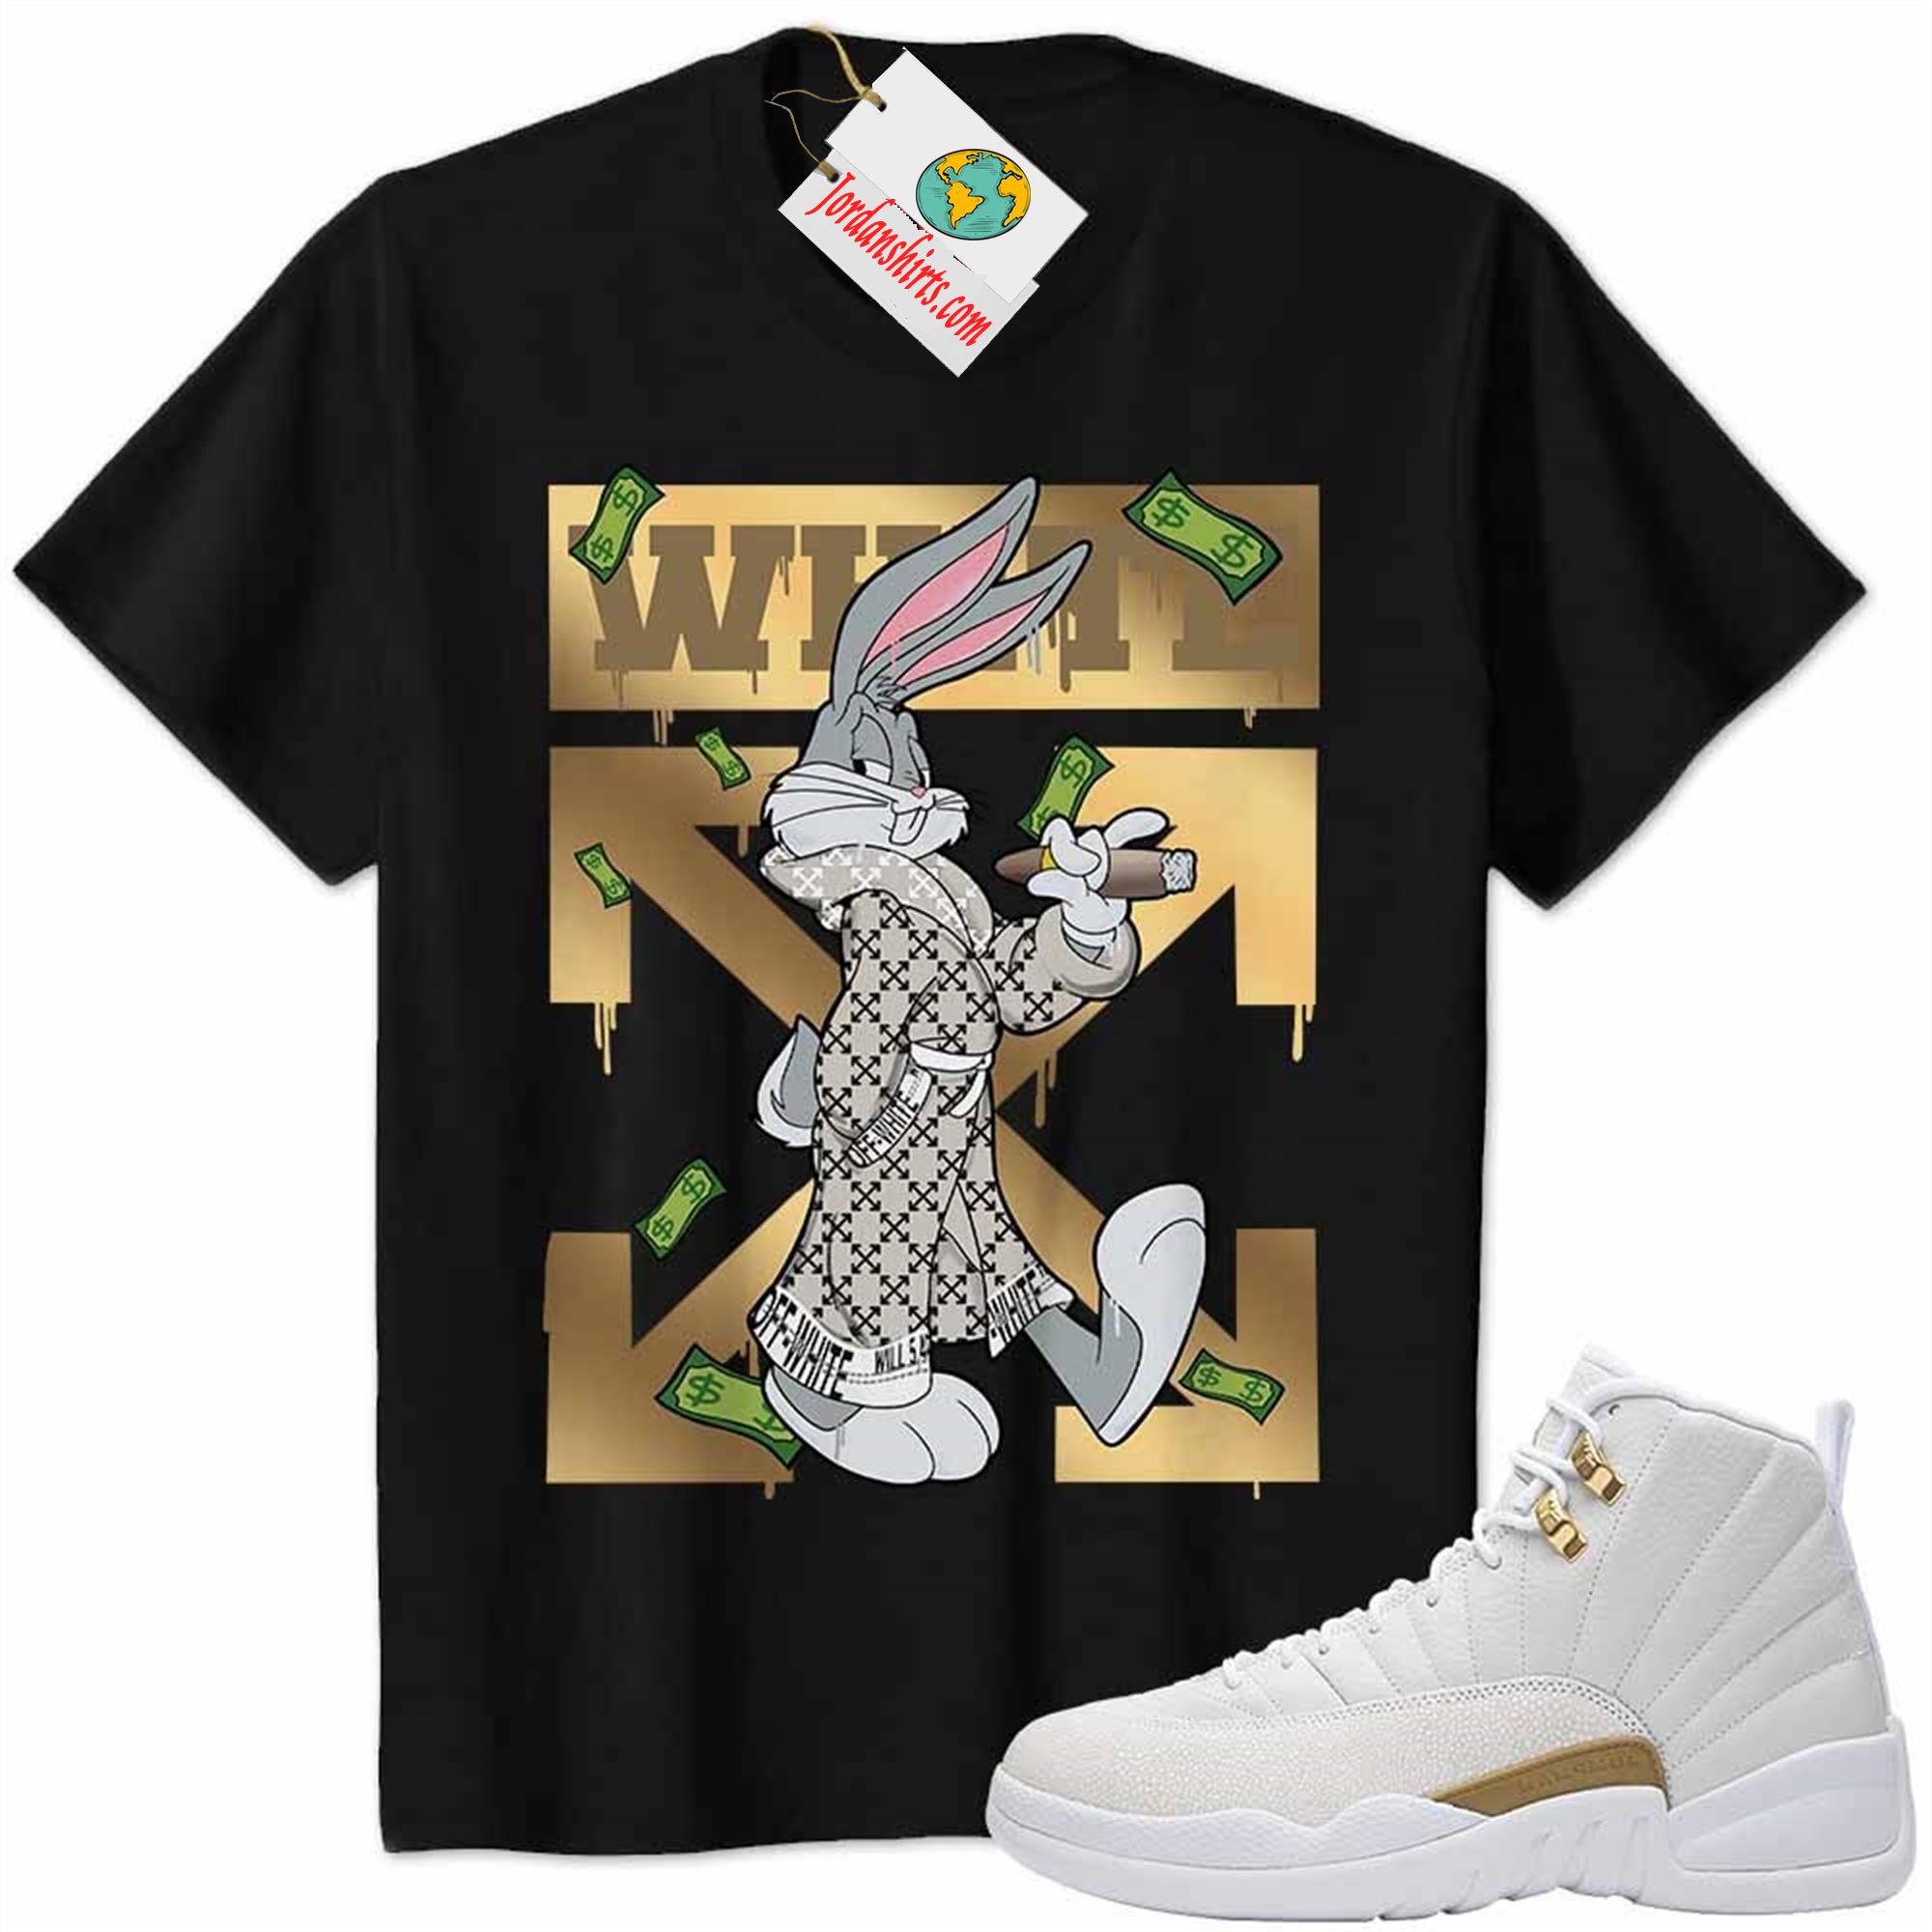 Jordan 12 Shirt, Jordan 12 Ovo Shirt Bug Bunny Smokes Weed Money Falling Black Size Up To 5xl